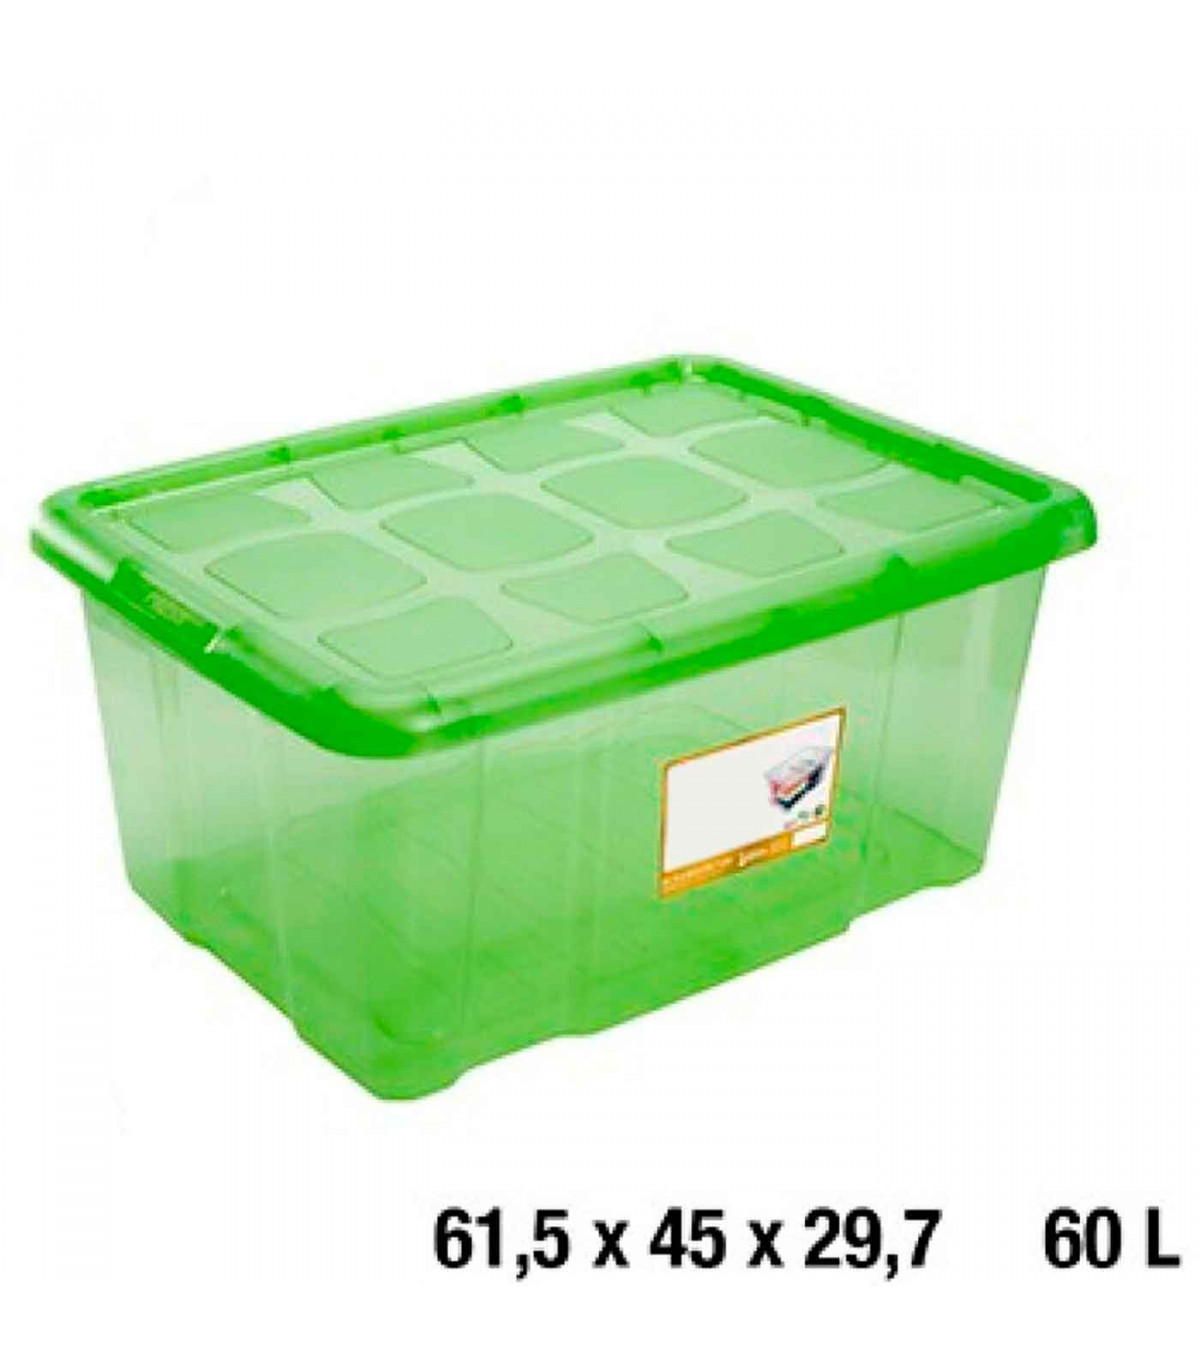 Caja para almacenaje tapa, plástico translúcido, cajón multiusos, ordenación, almacenamiento hogar, 60 litros, 29,7